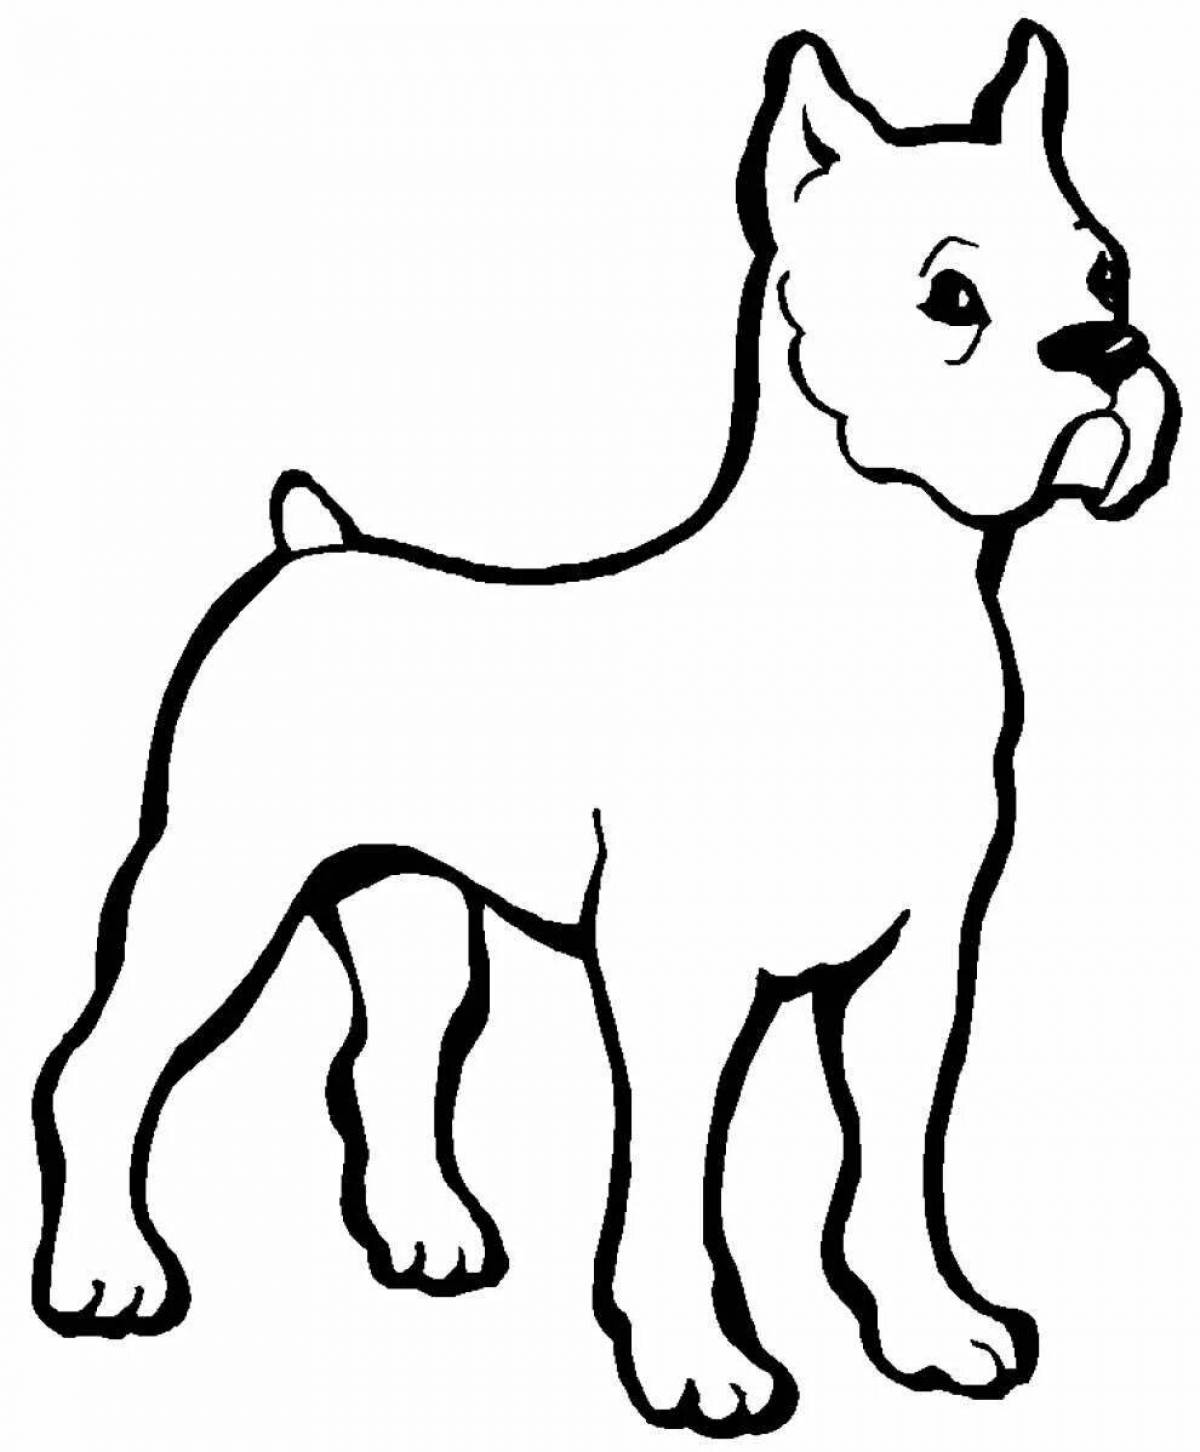 Fun coloring drawing of a dog